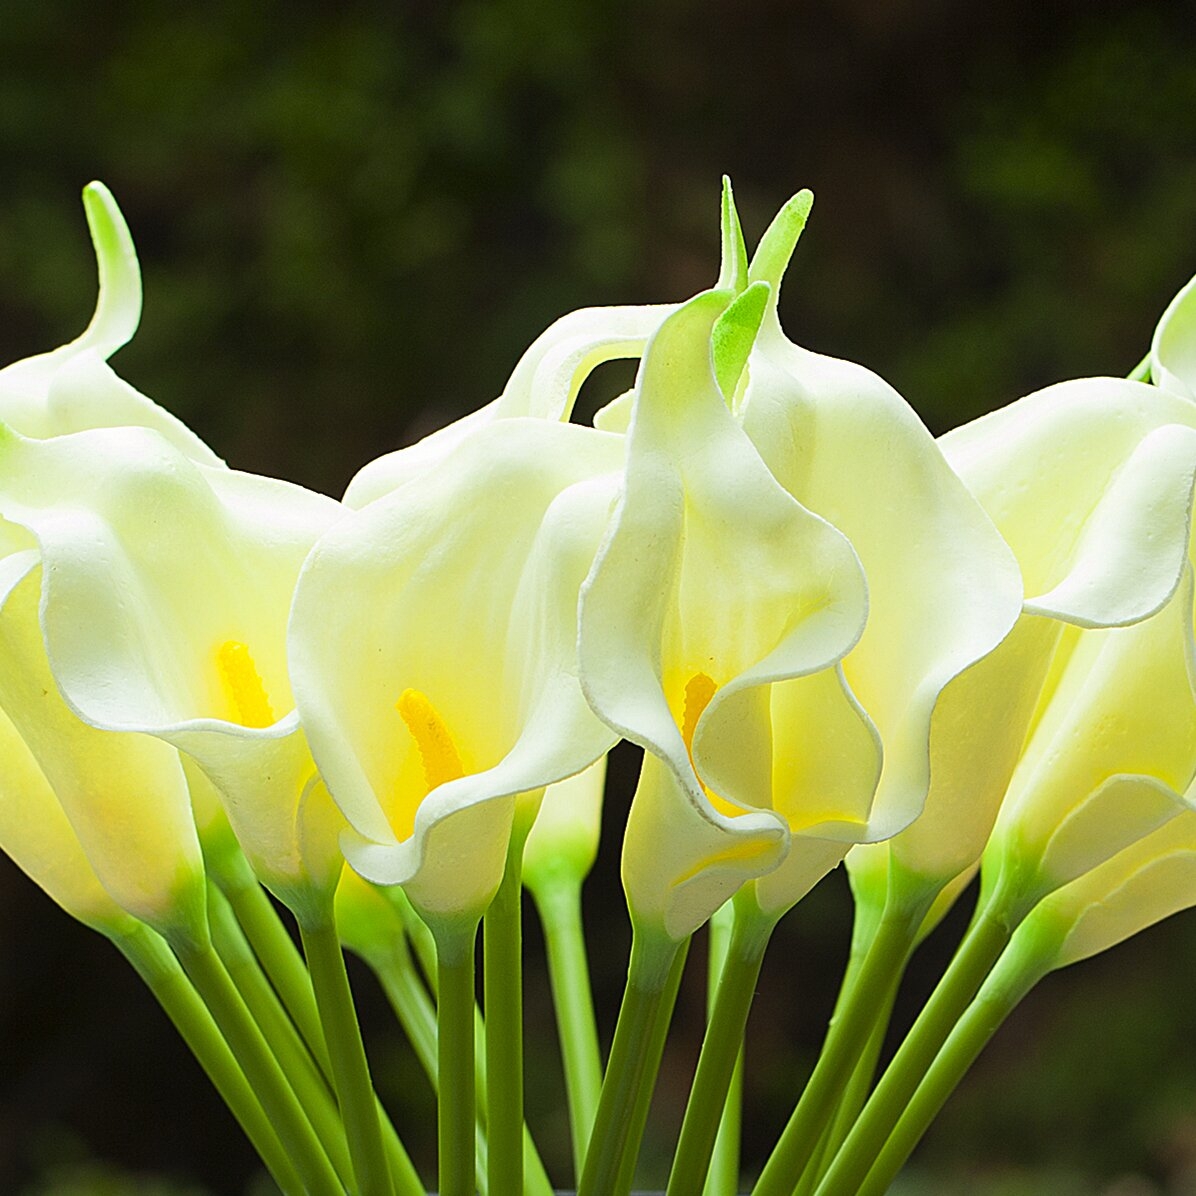 Lilies Flower Arrangement in Vase - Image 2